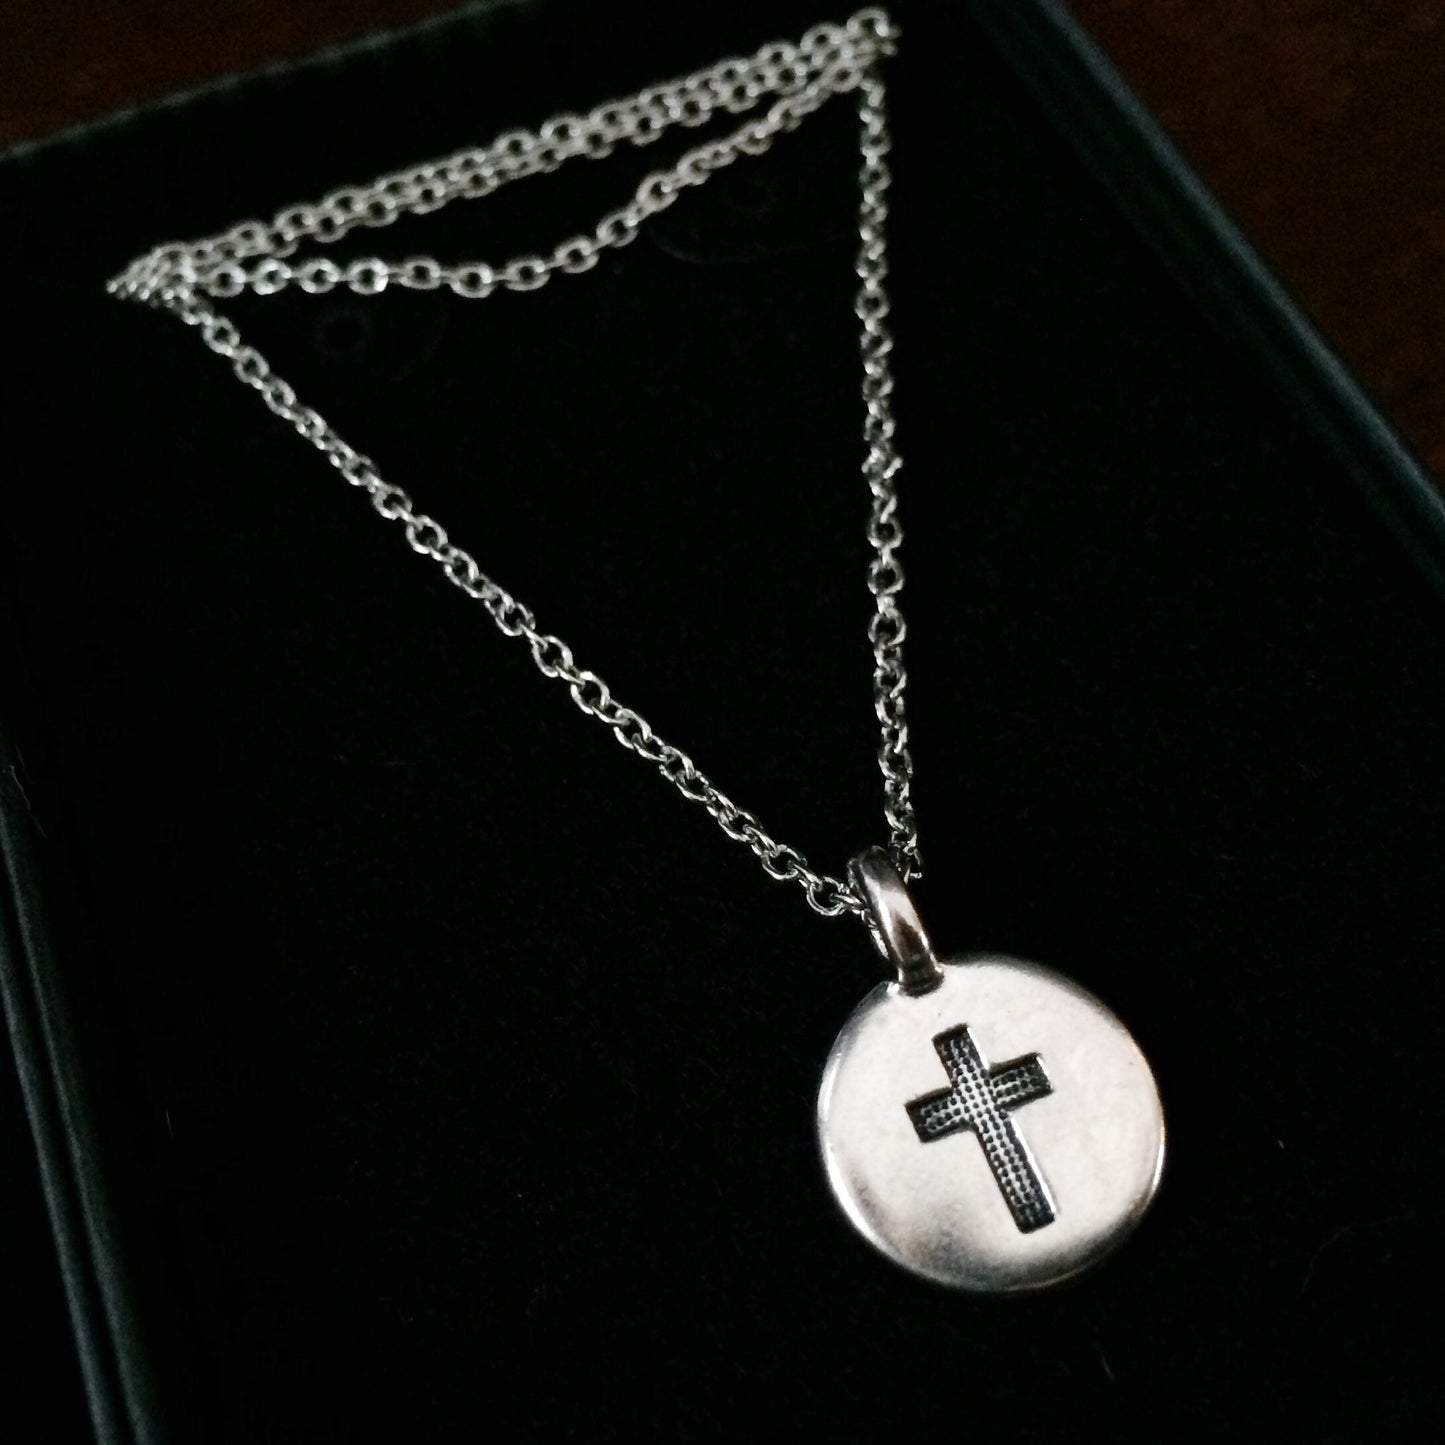 Tiny Cross Charm / Christian Charms (10pcs / 10mm x 17mm / Tibetan Silver / 2 Sided) Religious Catholic Jewellery Pendant Bracelet CHM966